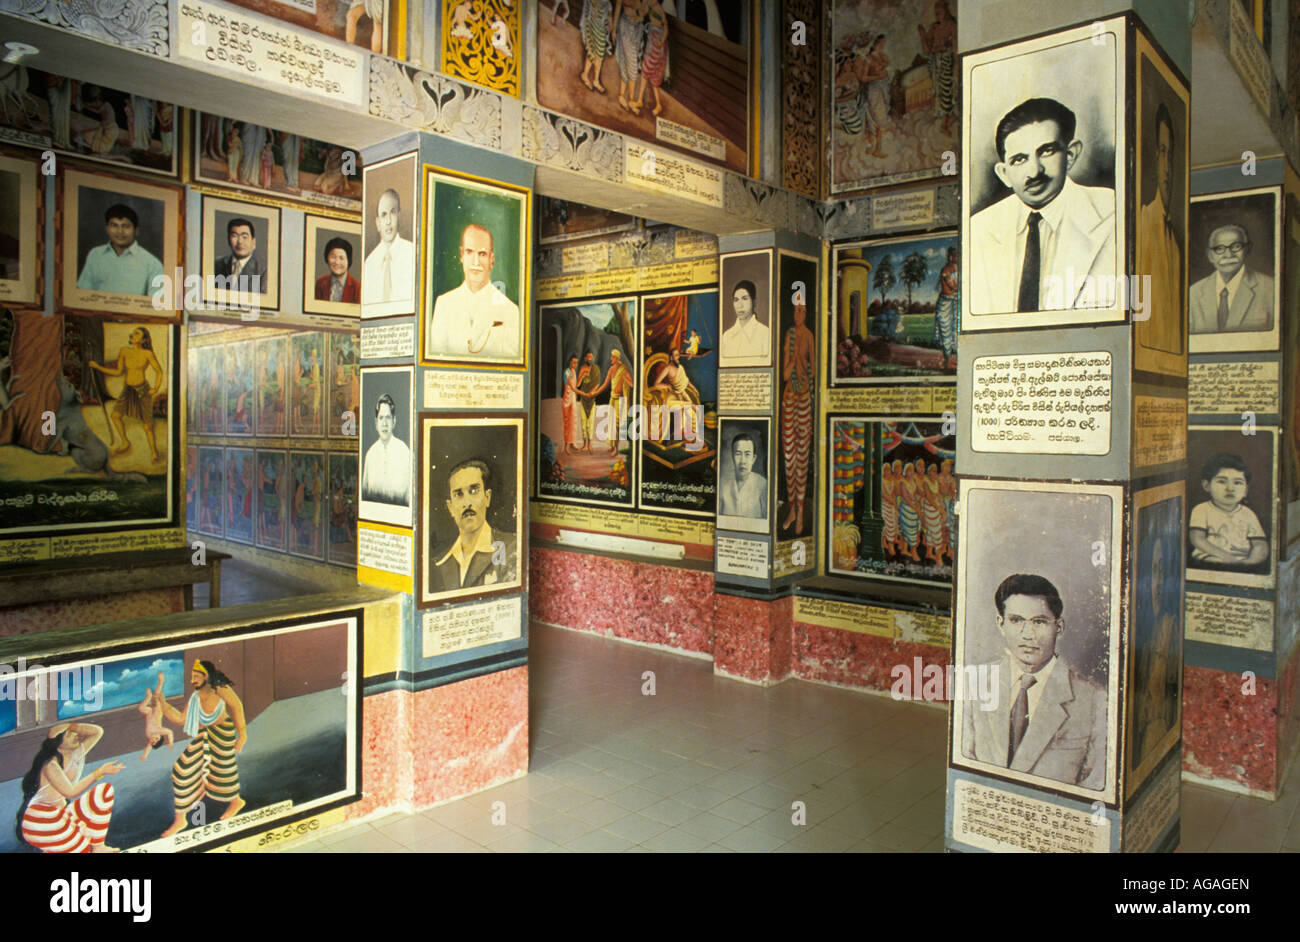 Sri Lanka, Matara, Gemälde und Fotografien an der Wand im Weherehana-Tempel Stockfoto